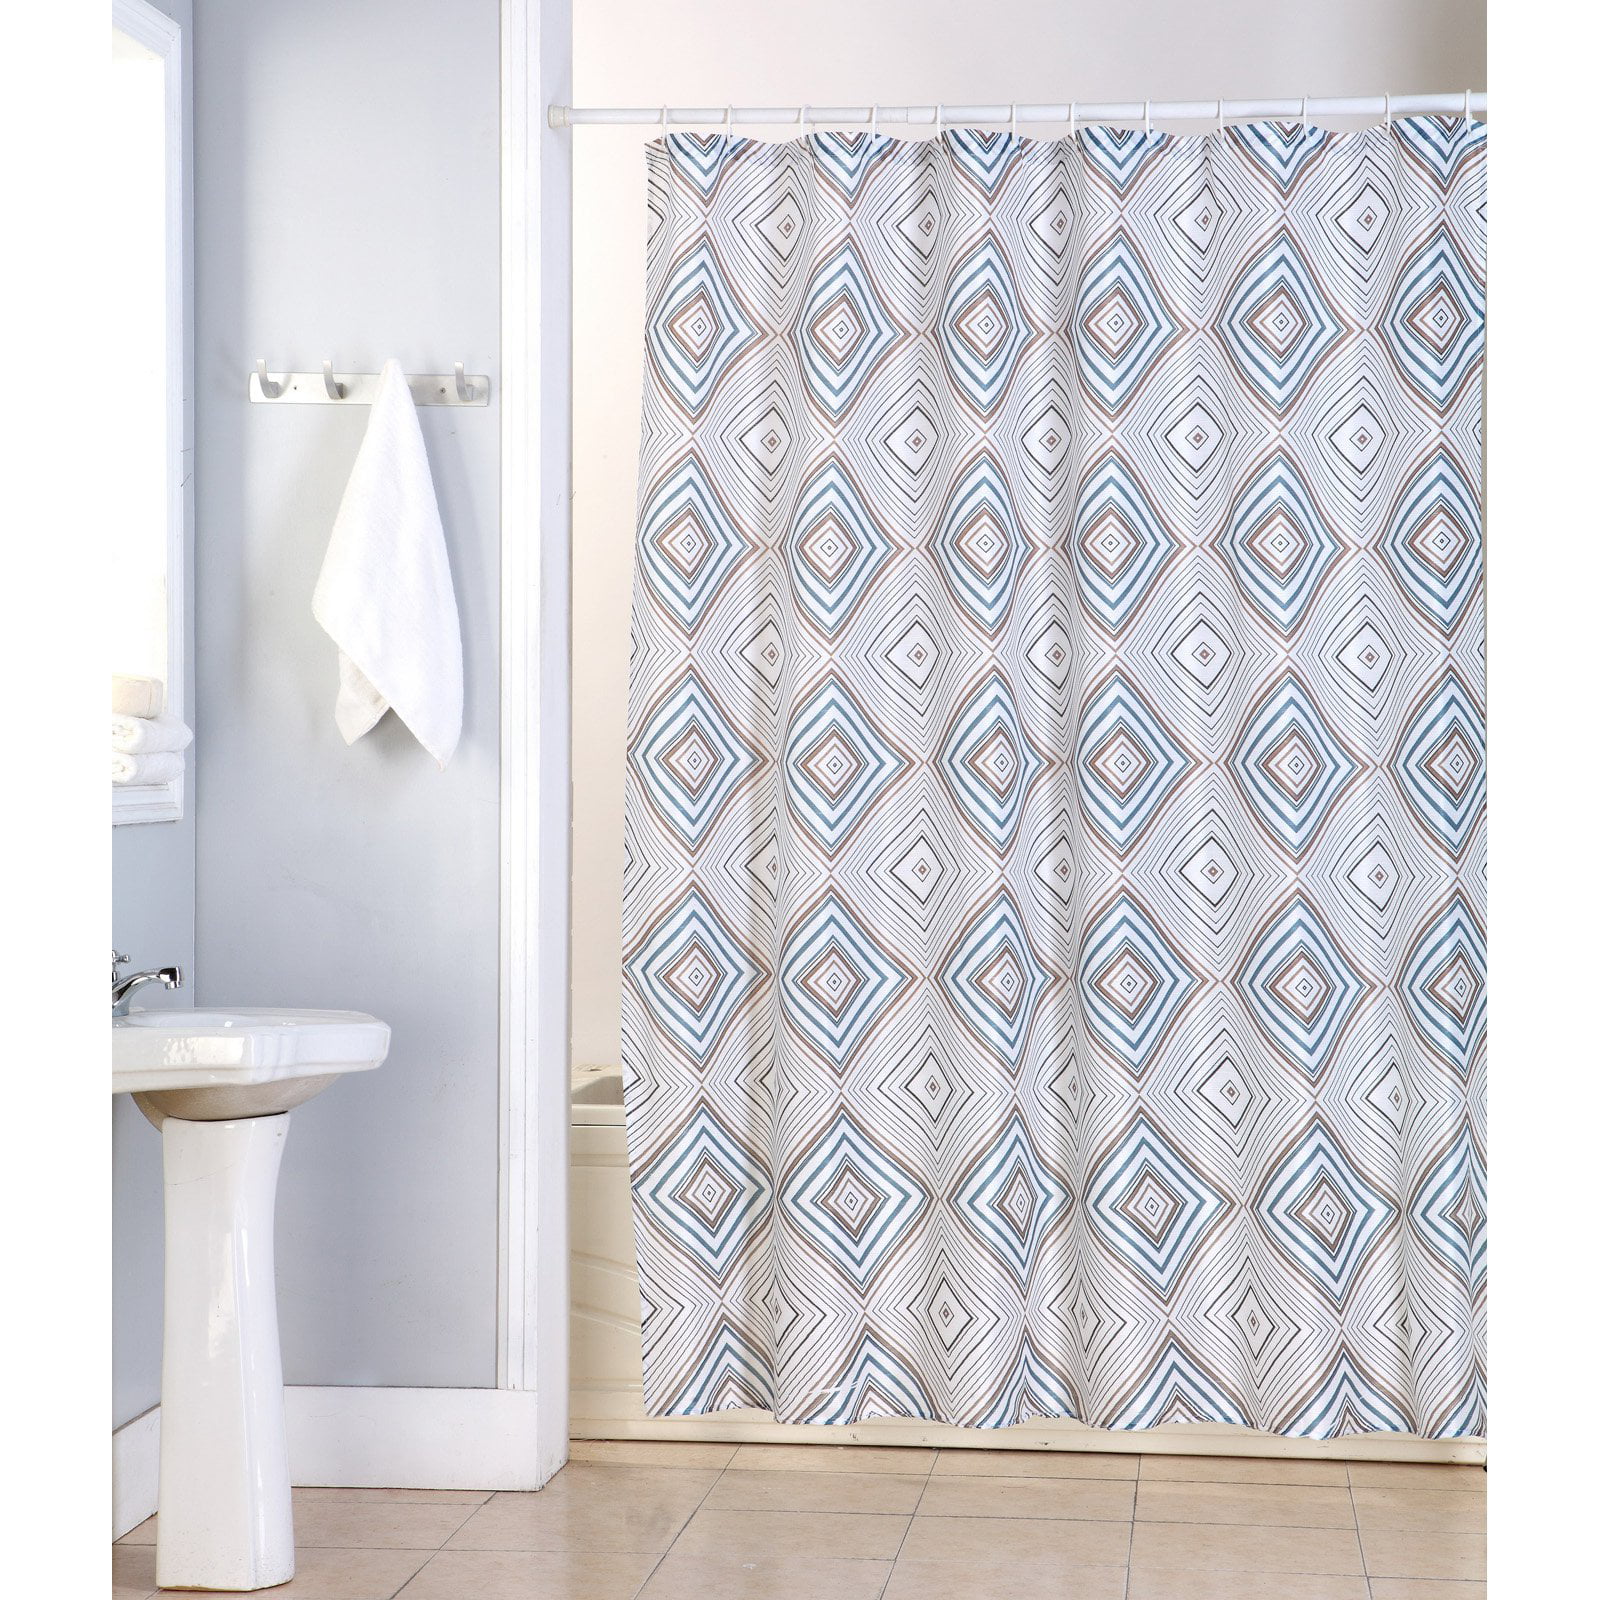 Kashi Home Kaitlyn Canvas Fabric Shower Curtain - Walmart.com